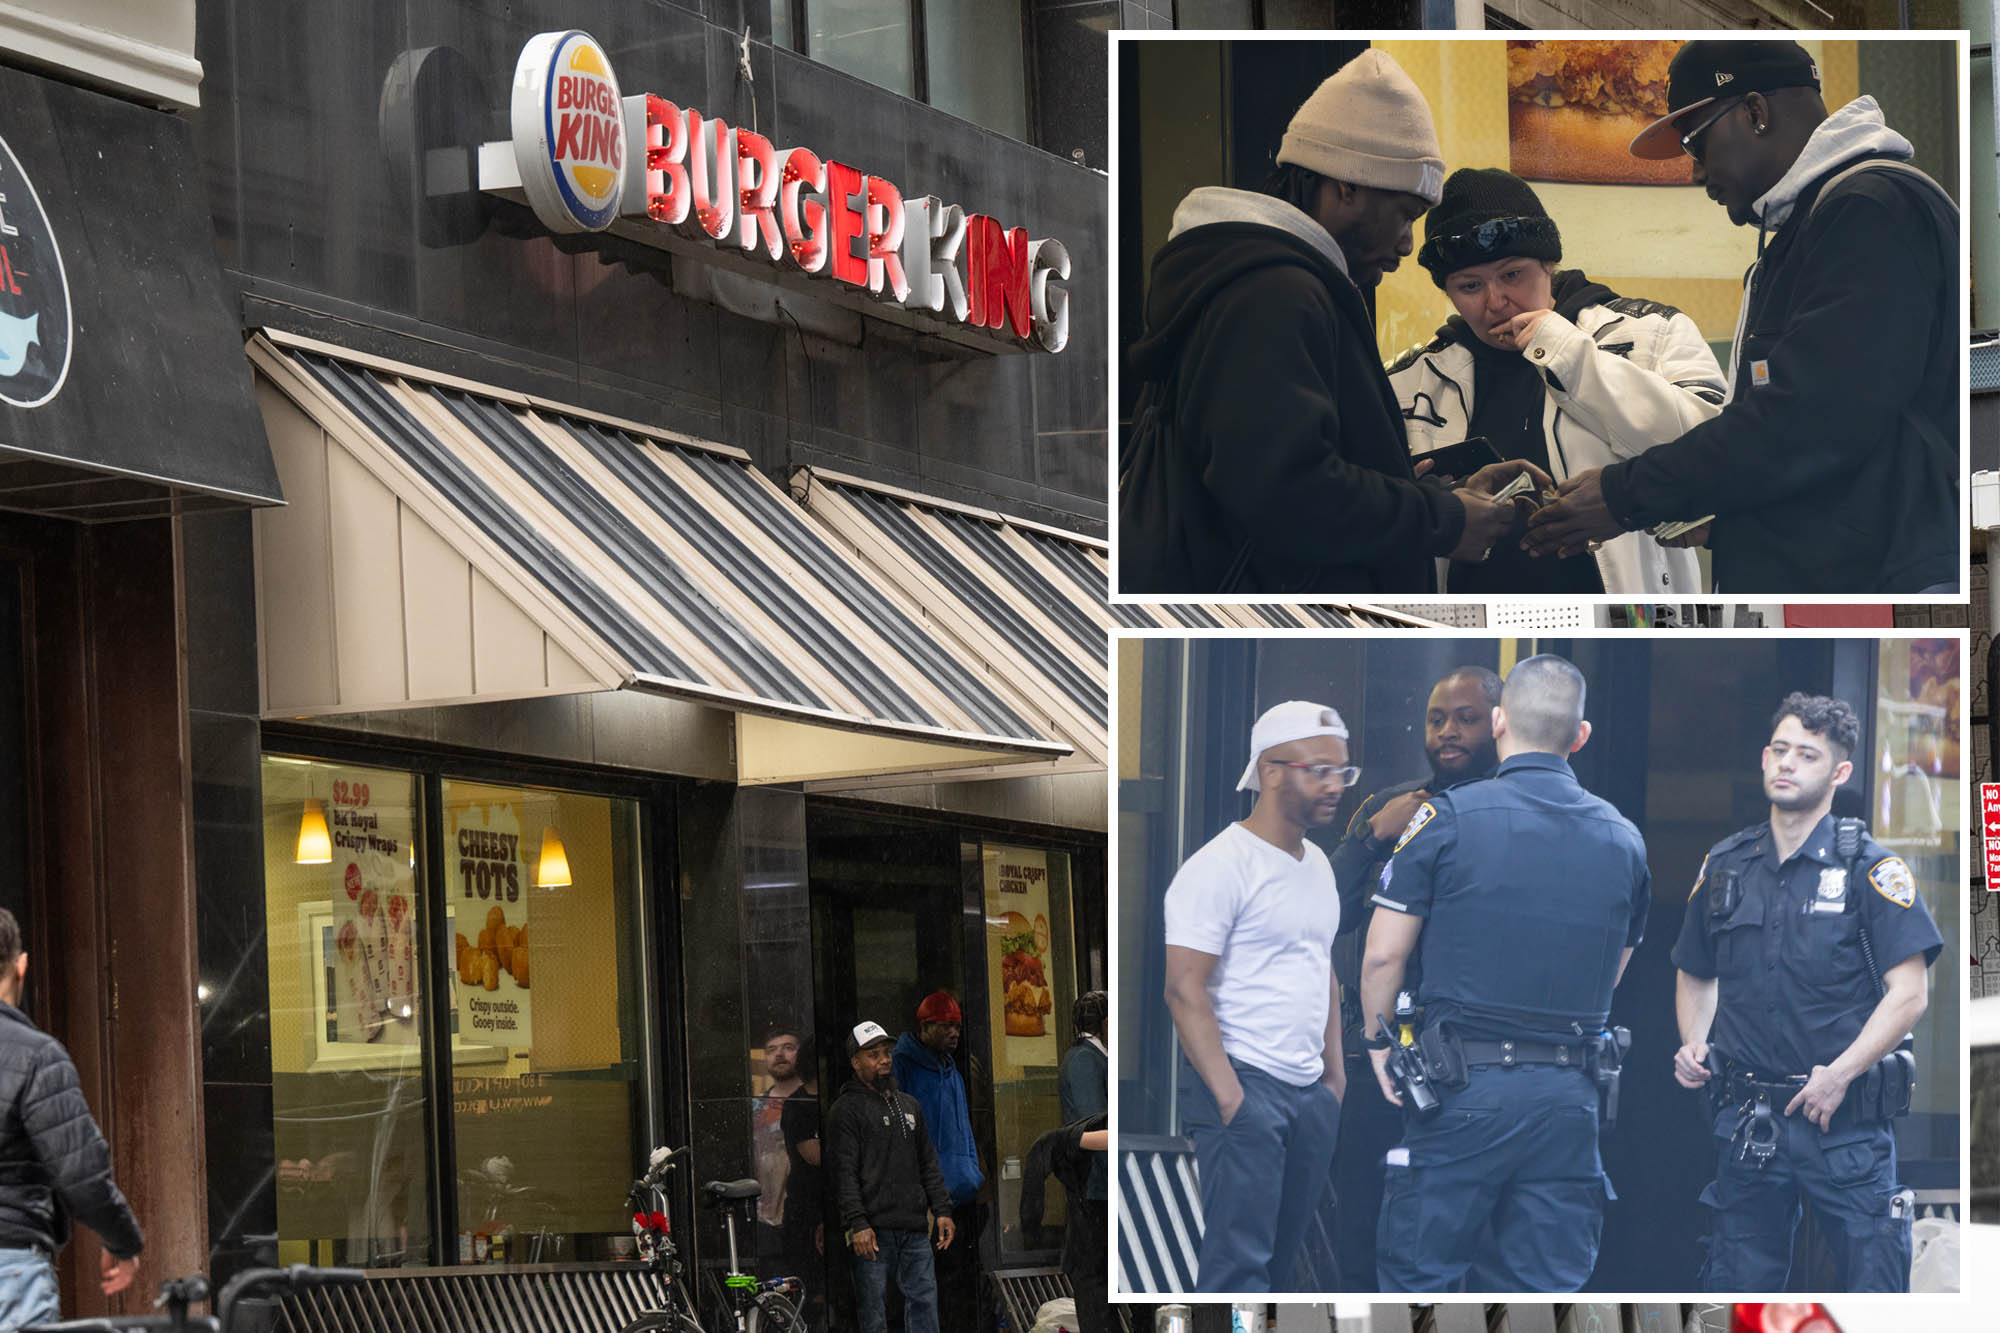 NYC Burger King owner blames ‘open air drug bazaar’ on neighbor who sued him